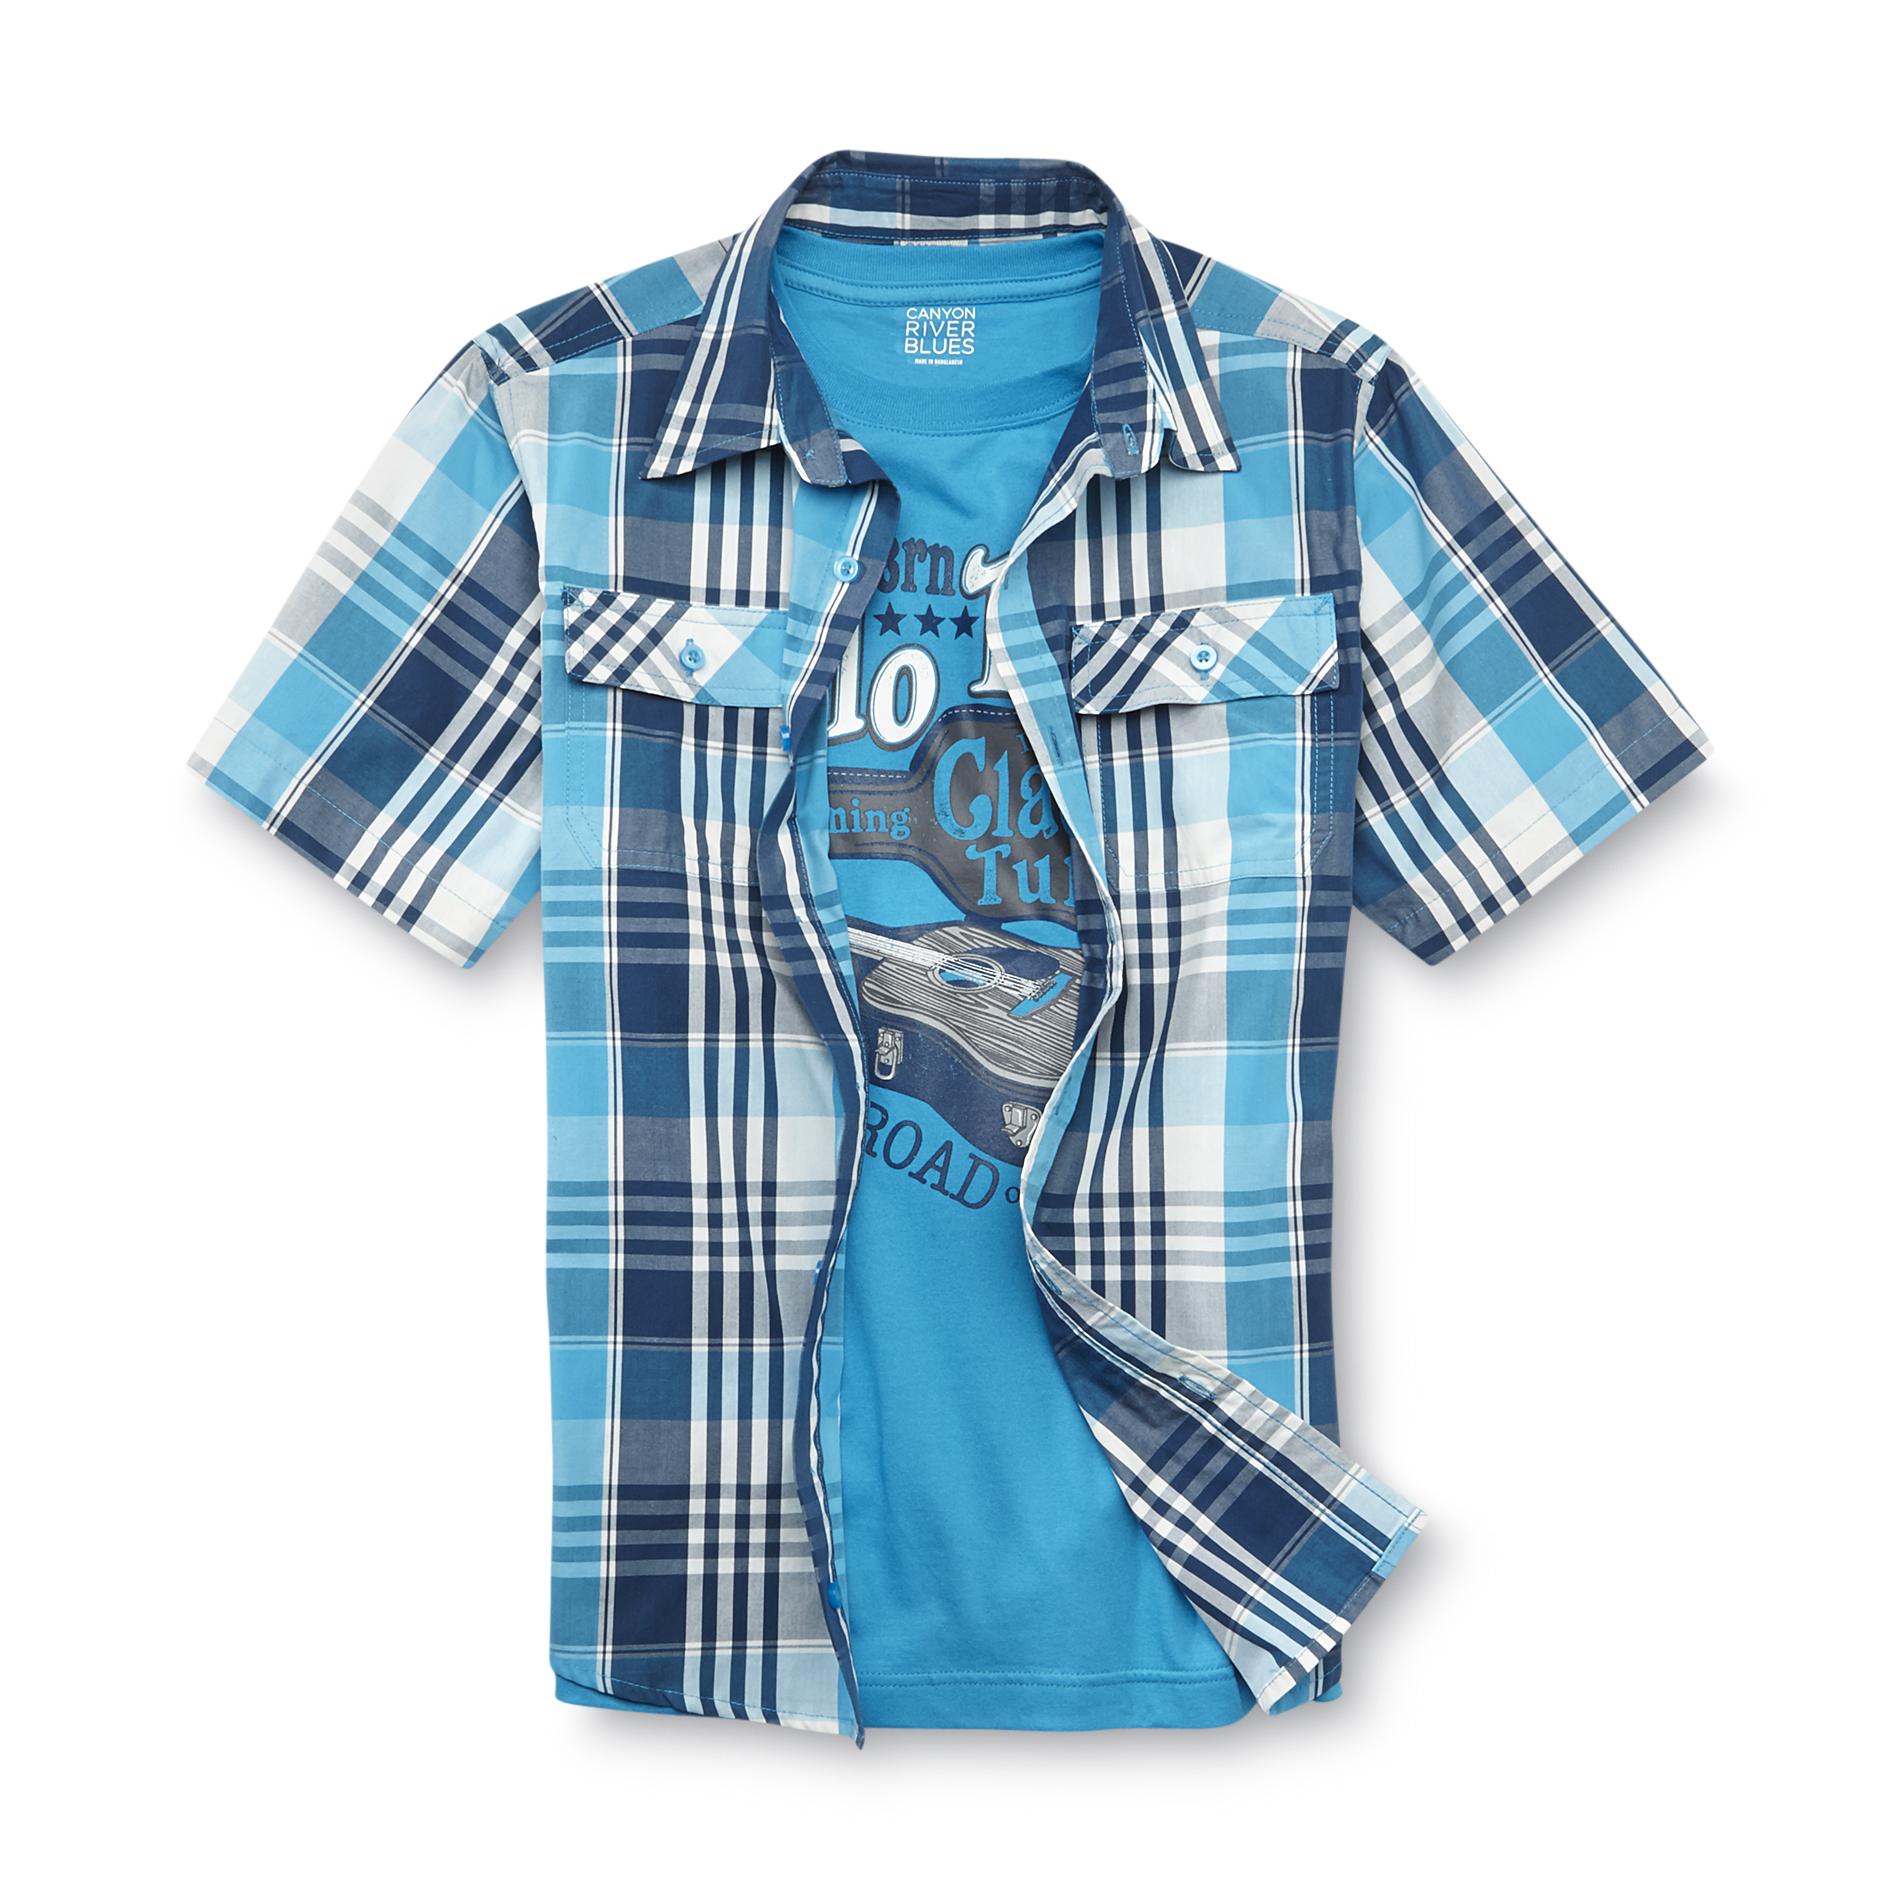 Canyon River Blues Boy's Button-Front Shirt & Graphic T-Shirt - Plaid